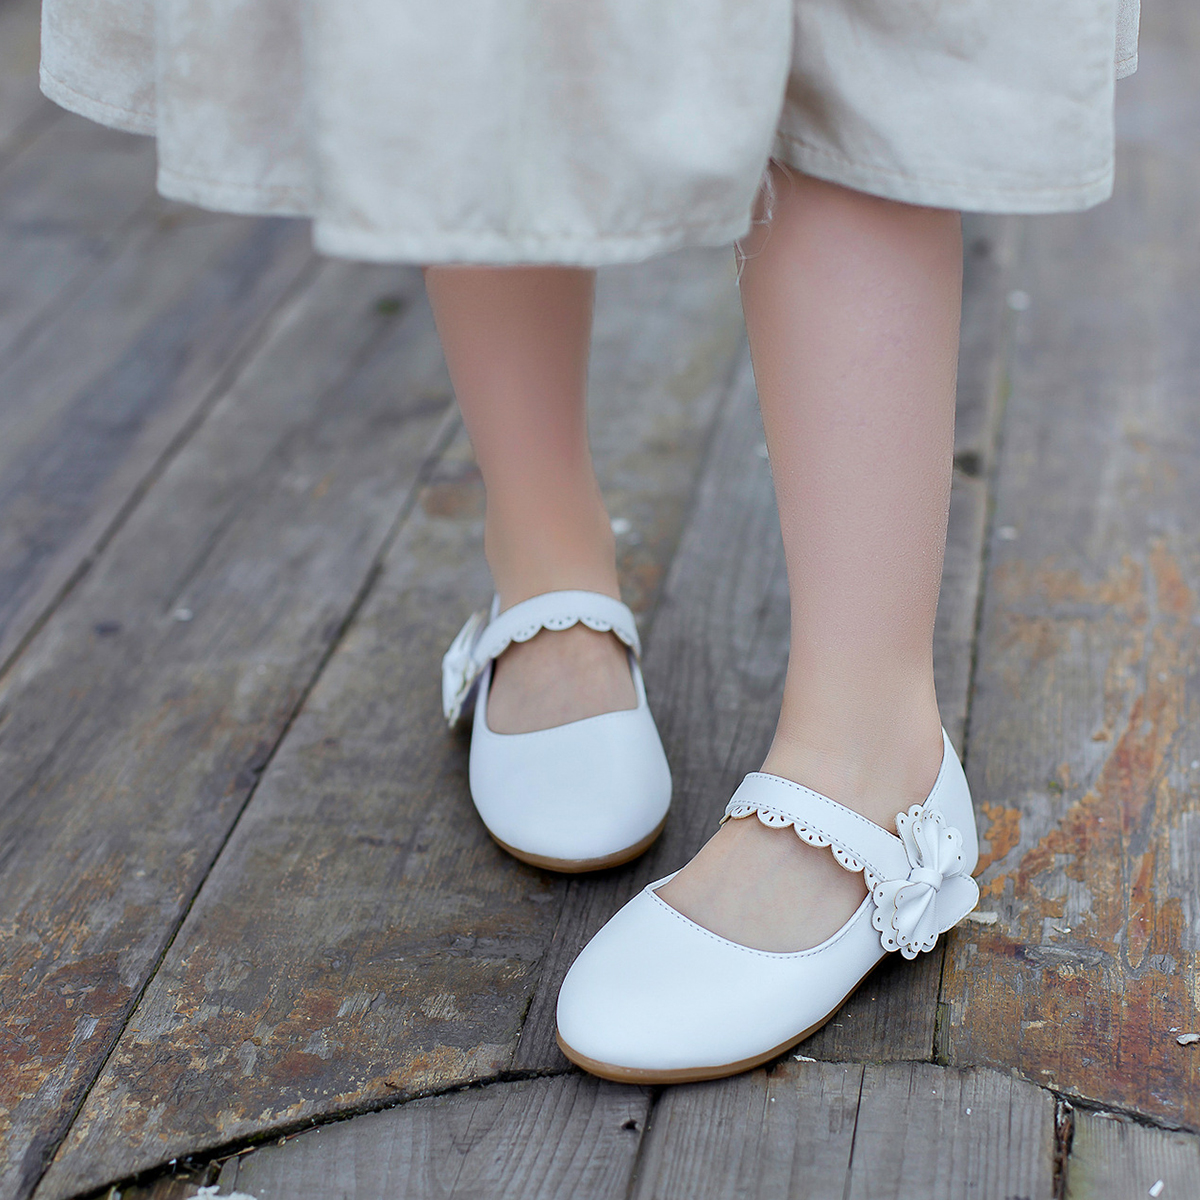 Hawee Ballet Flat Mary Jane Shoes Bowknot Princess Dress Shoes (Toddler Girls & Little Girls & Big Girls) - image 4 of 6